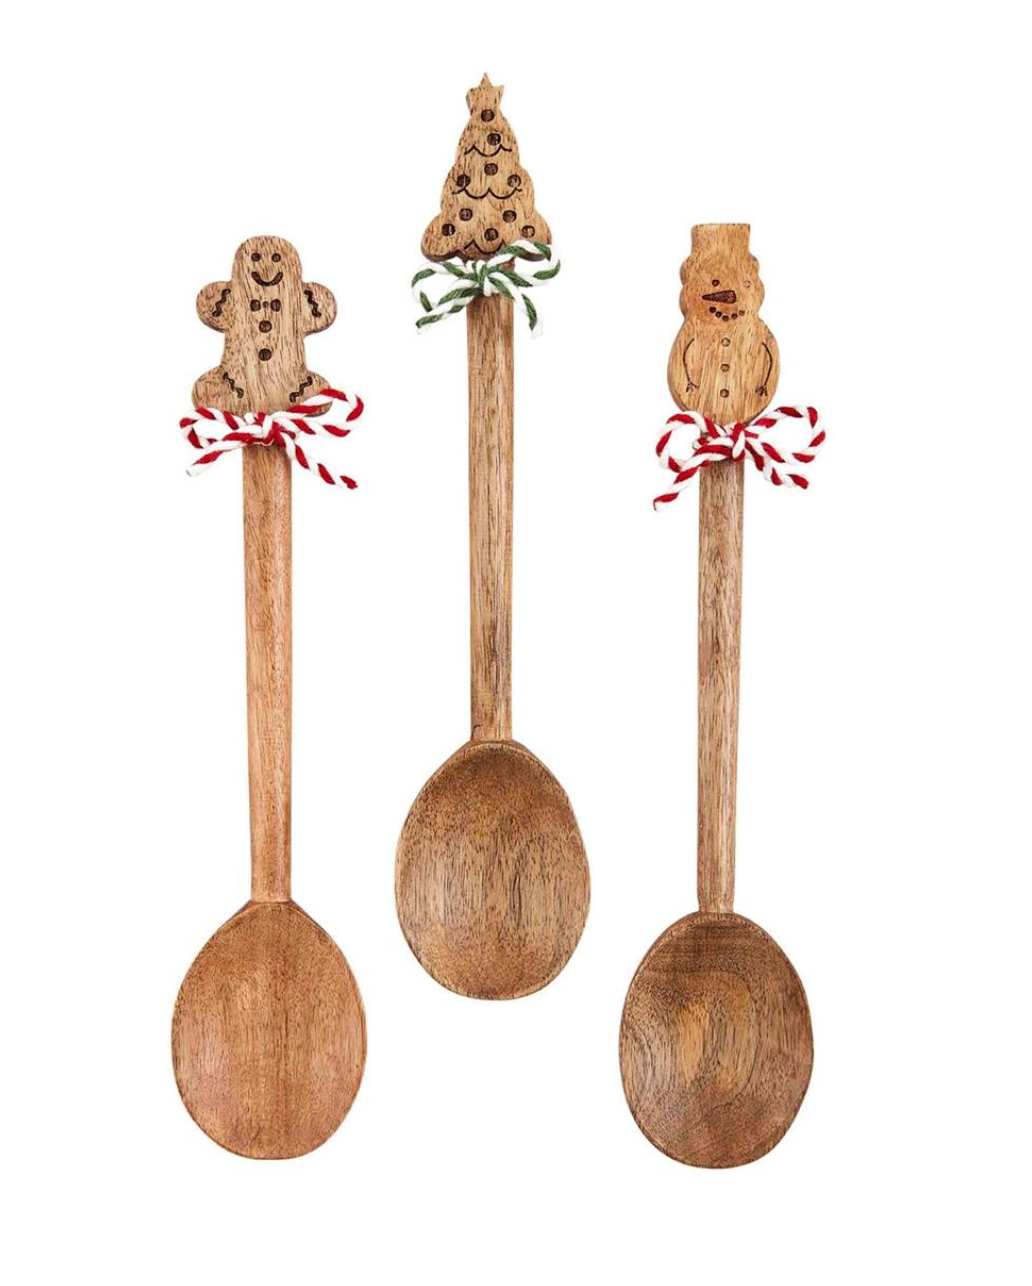 Mango Wood Christmas Spoons- 3 Designs